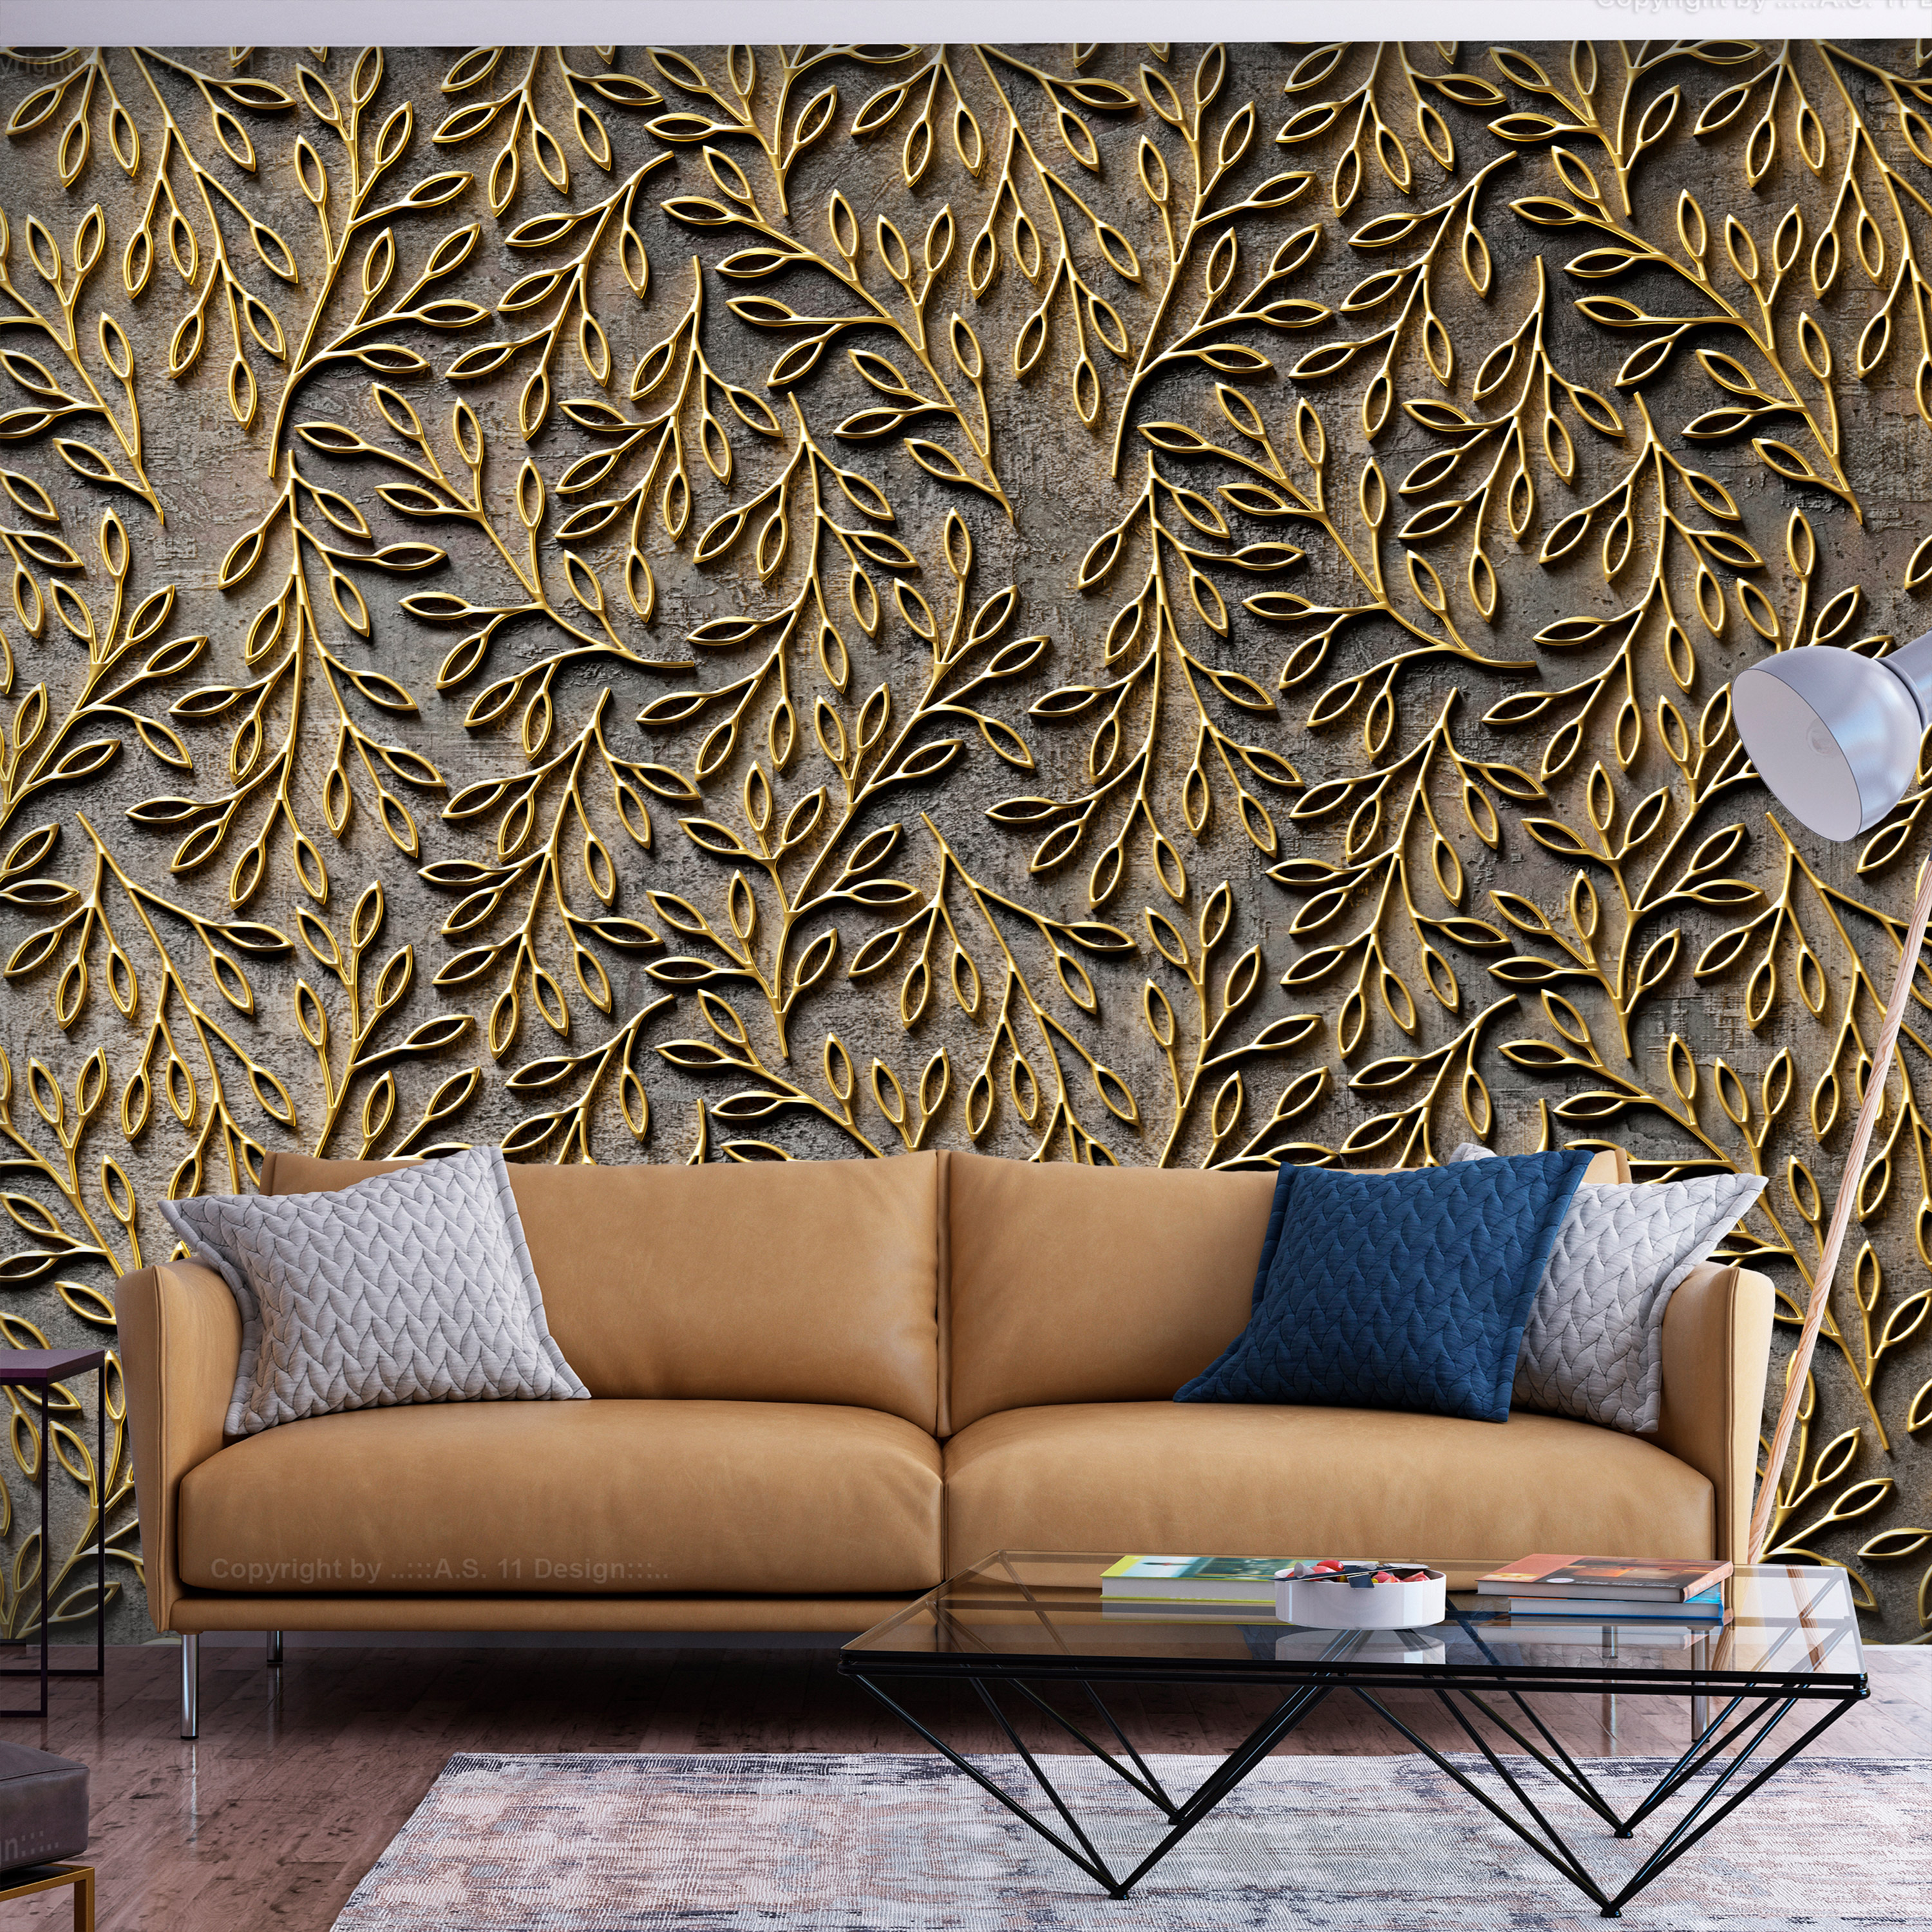 Self-adhesive Wallpaper - Golden Decorations - 147x105